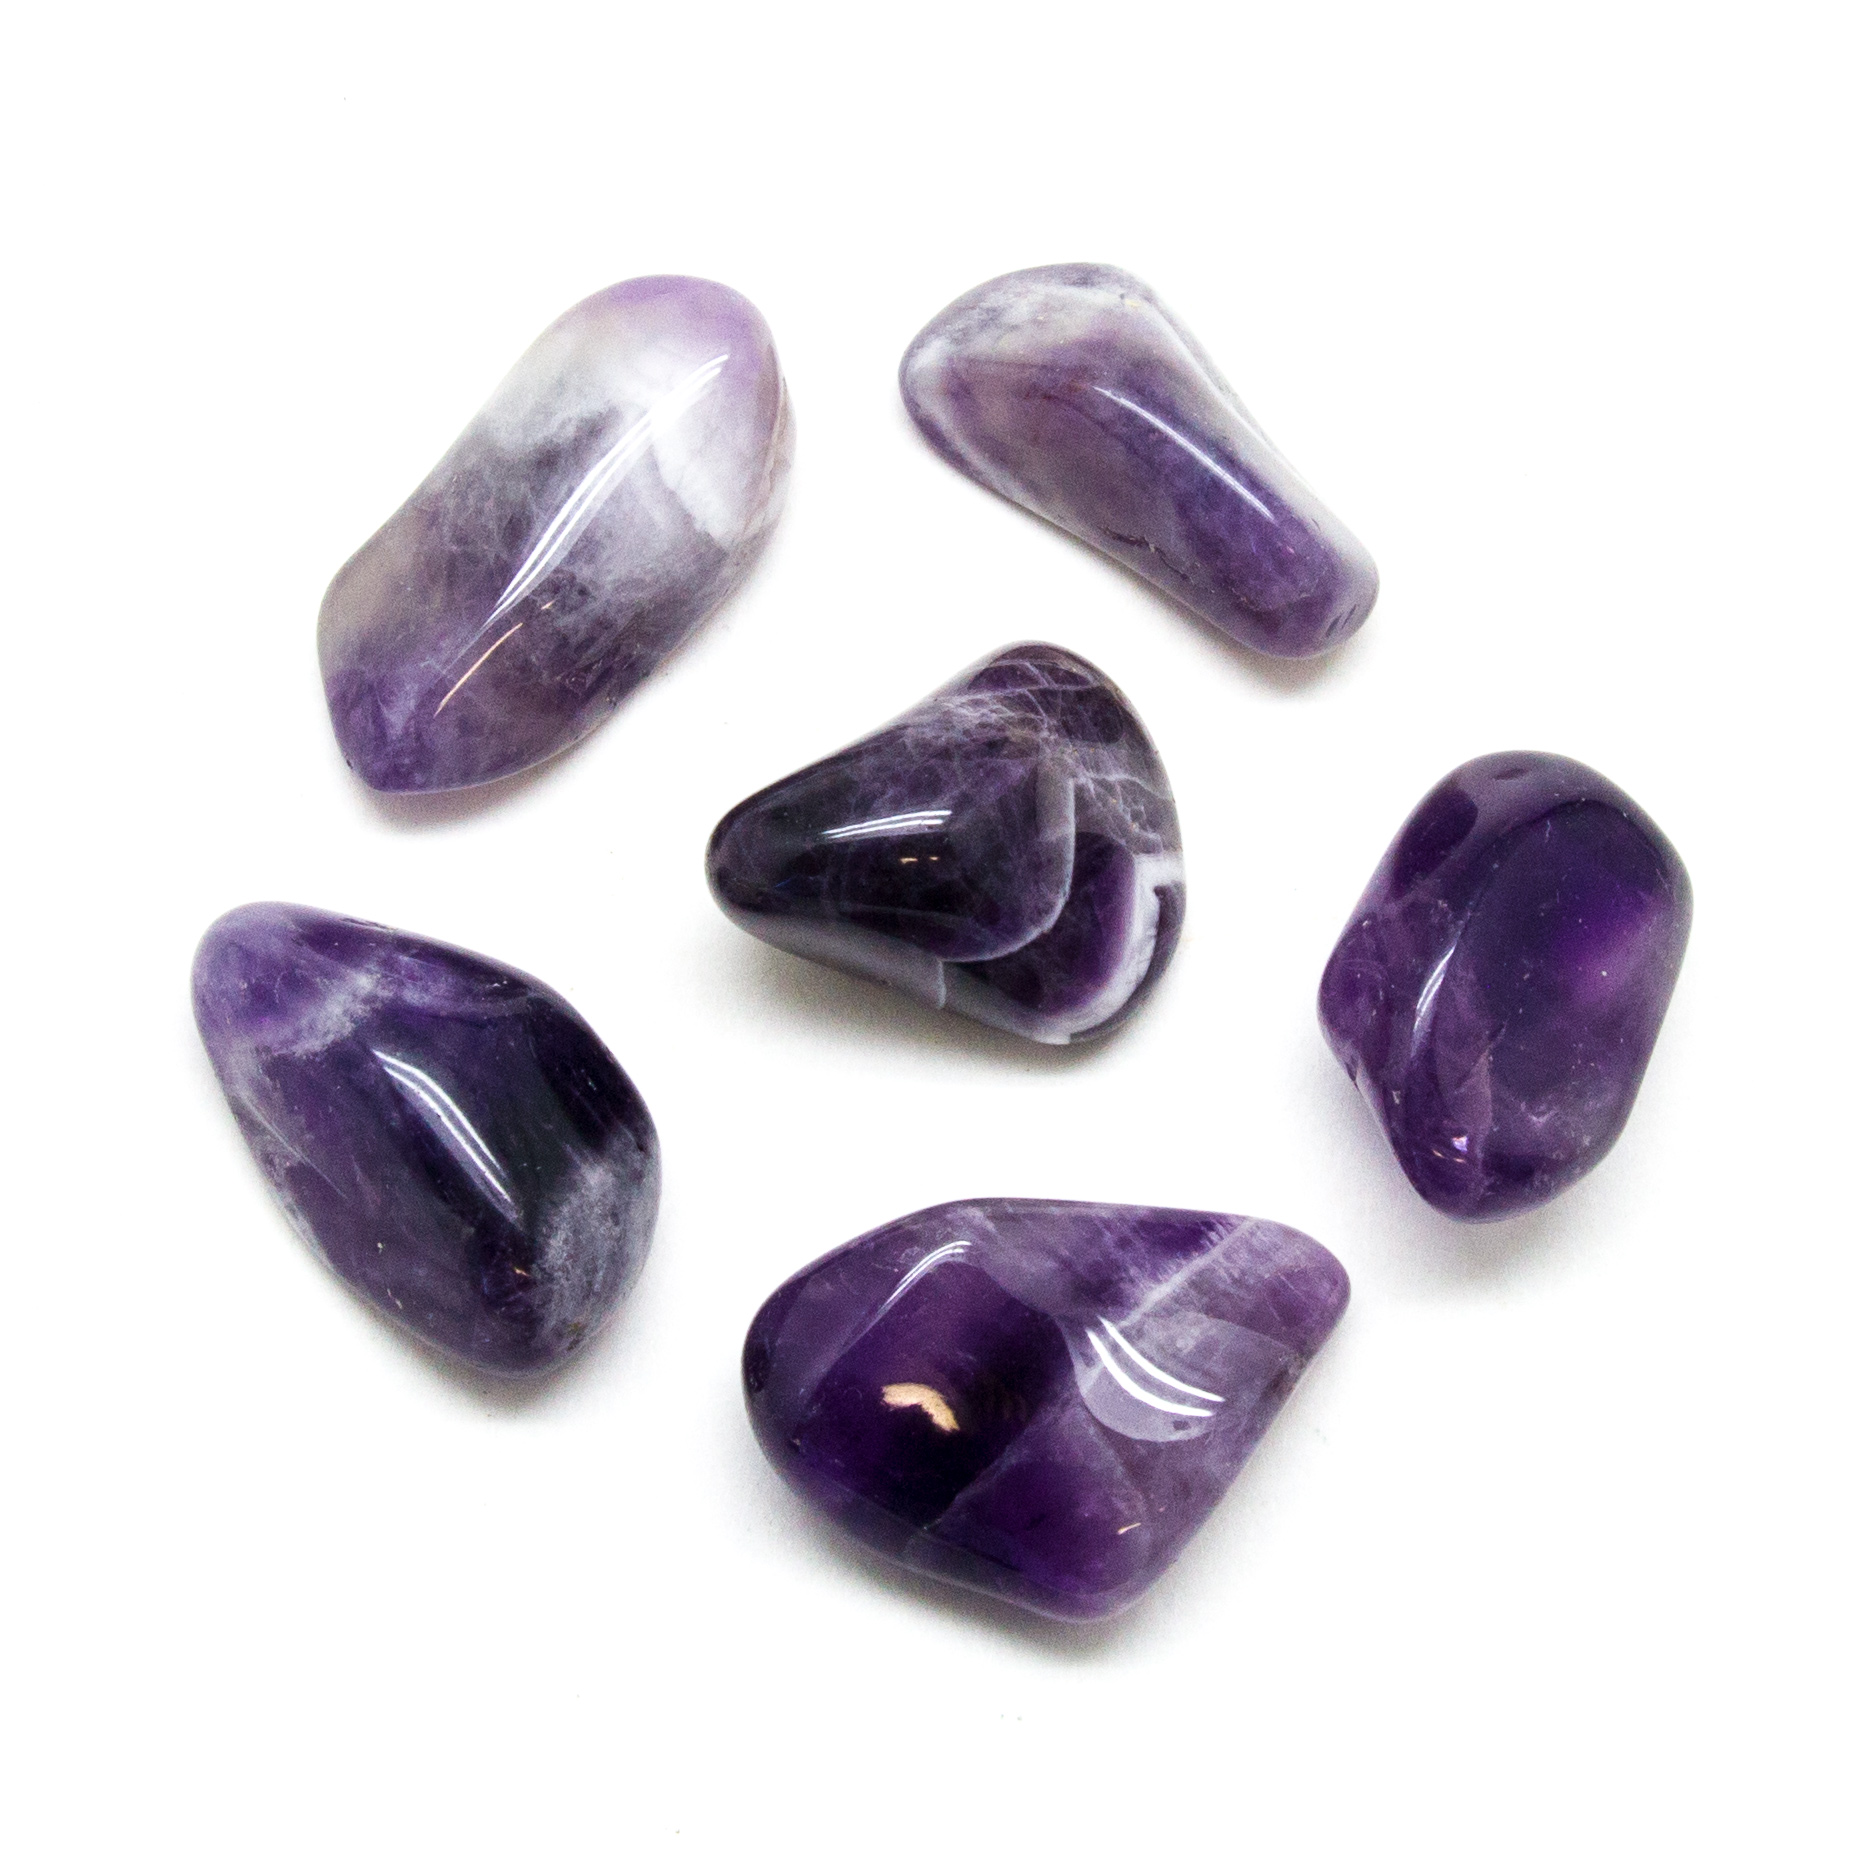 100 Grams Dark Amethyst Tumbled Polished Natural Crystal Healing Pocket  Stones Rock Collection Beads Jewelry Making & Beading lifepharmafze.com